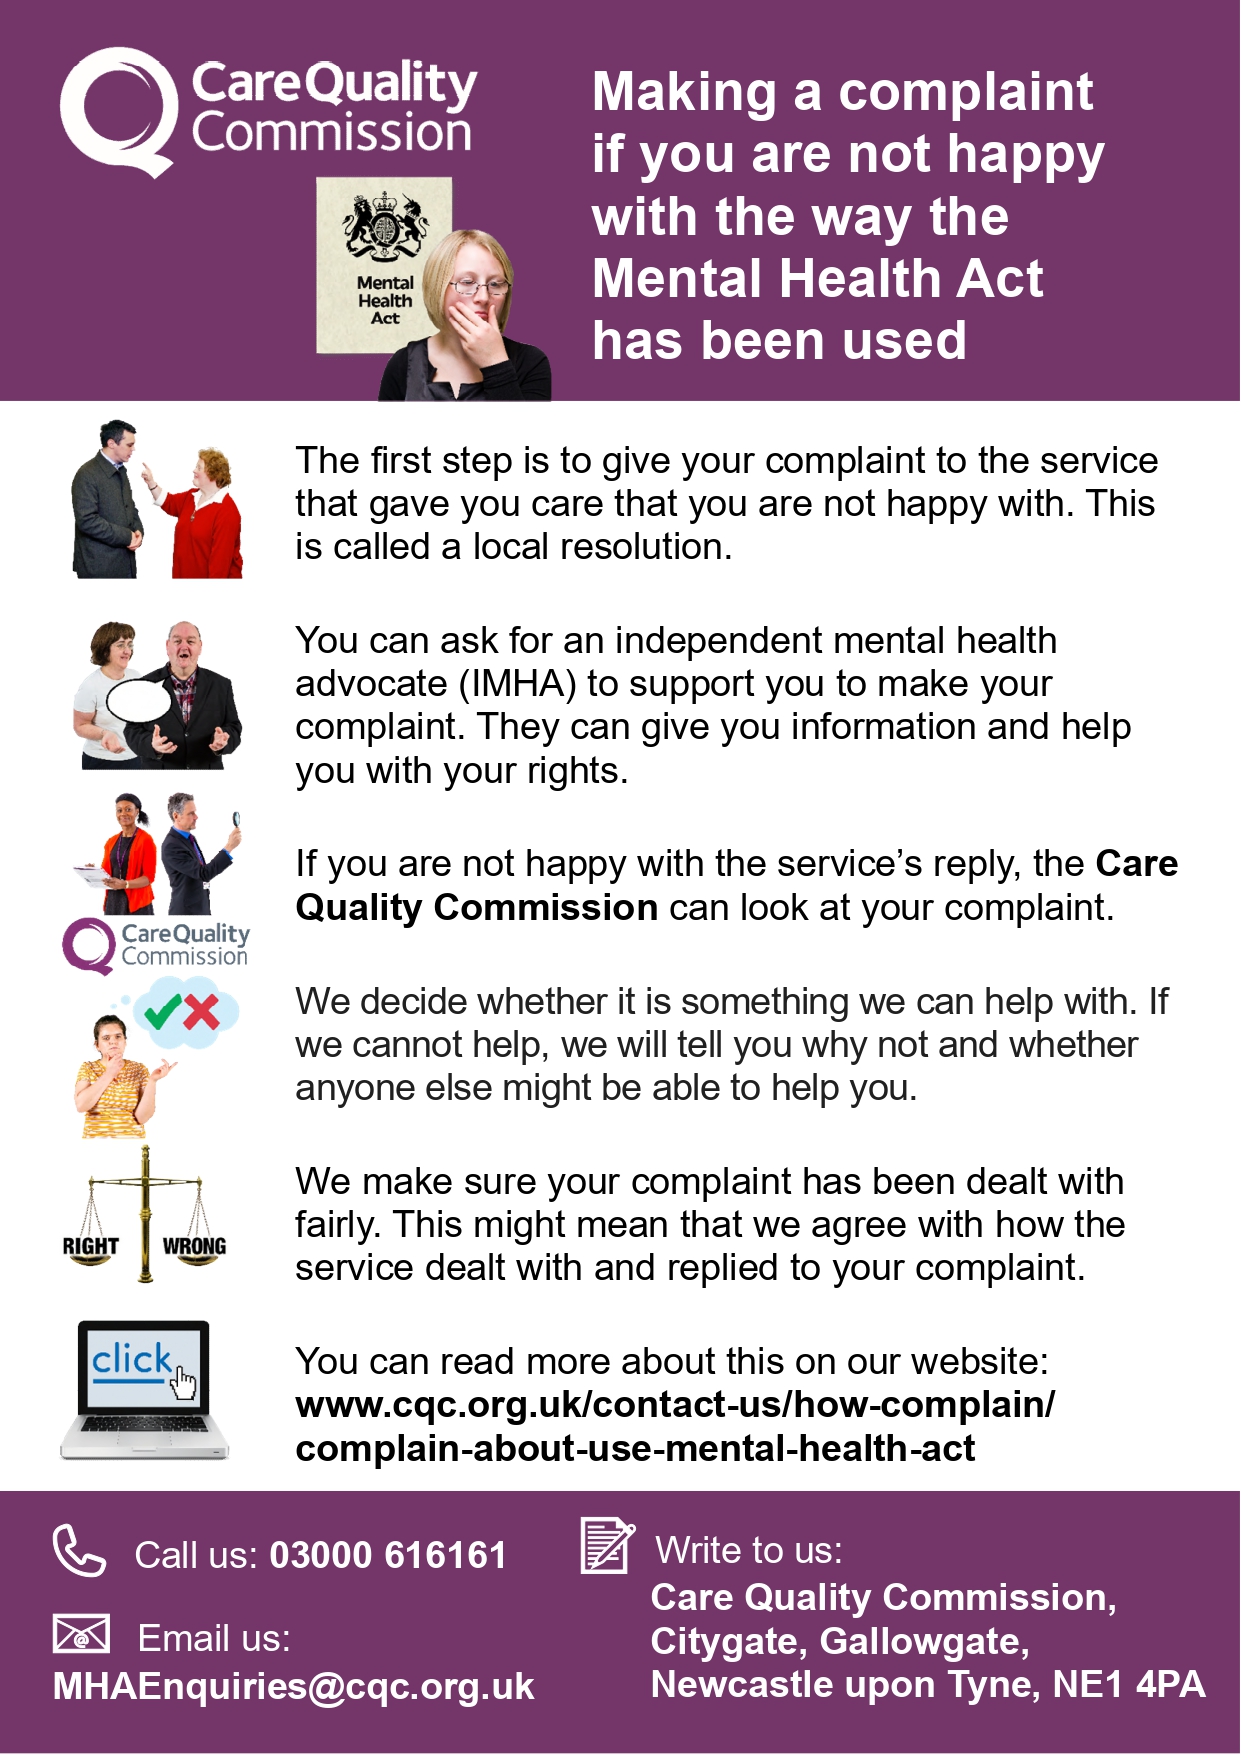 cqc mental health act complaints easyread poster